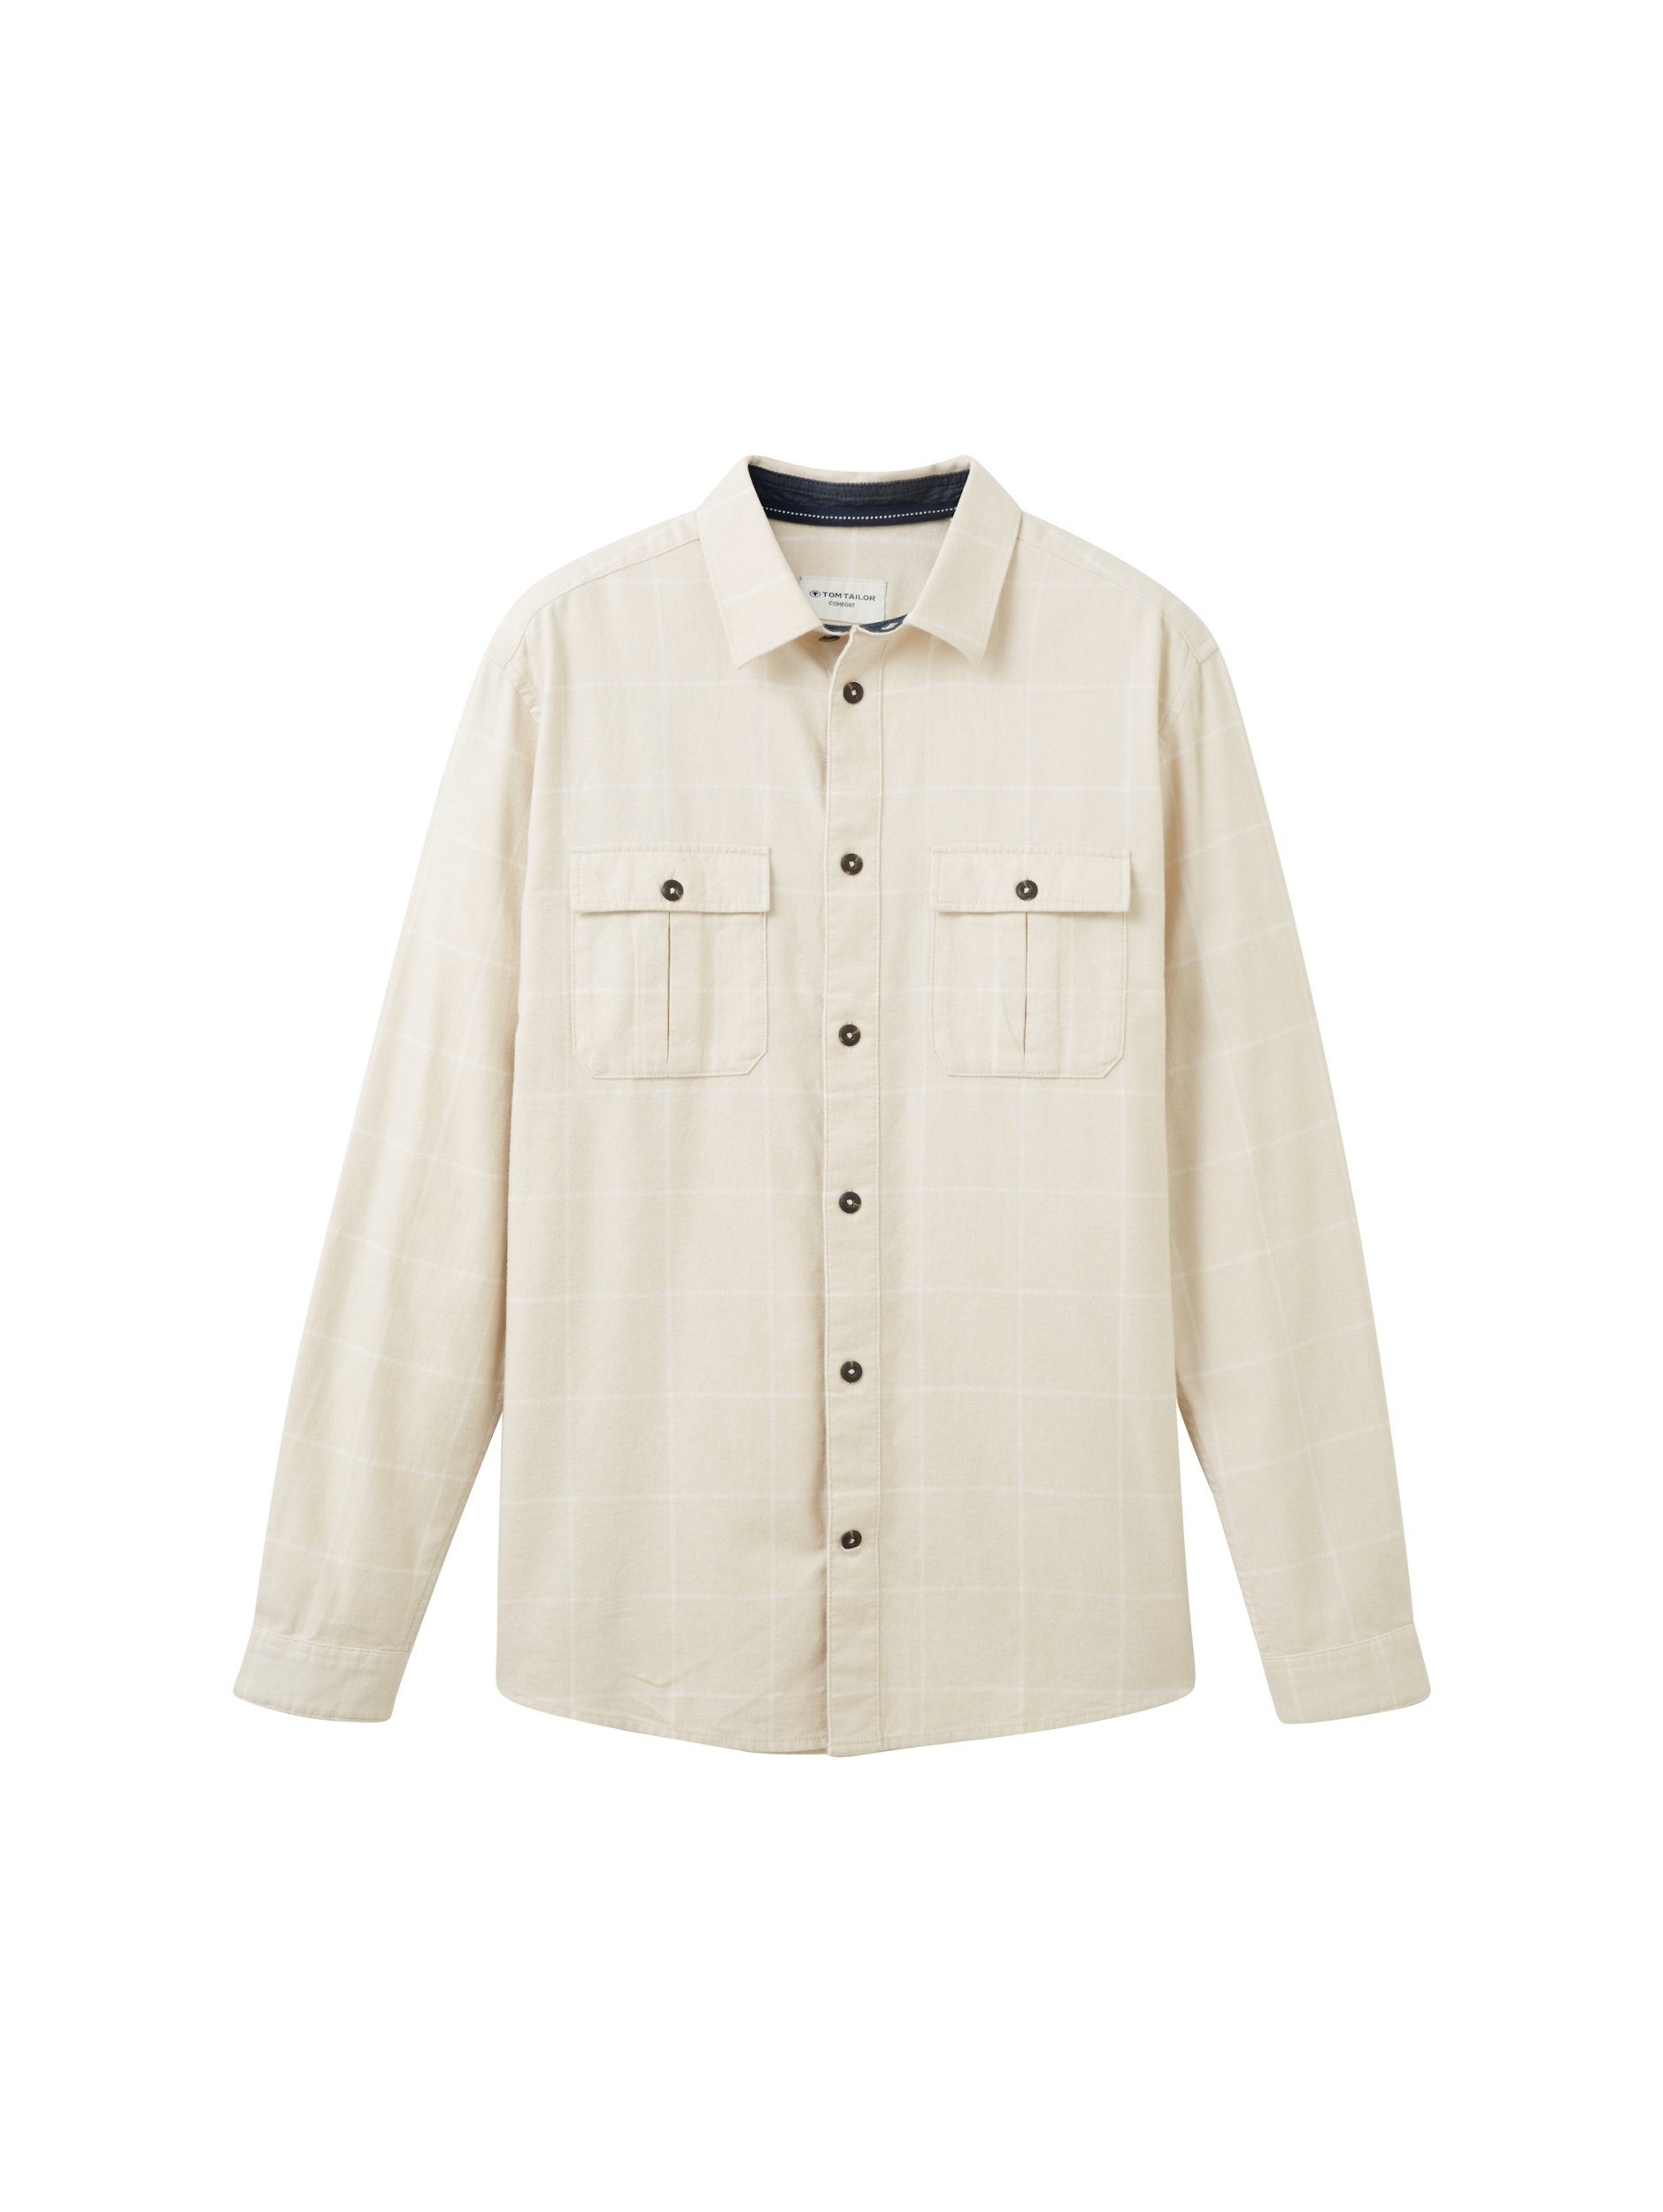 TOM TAILOR Kurzarmshirt comfort check vintage checked beige tonal tonal shirt